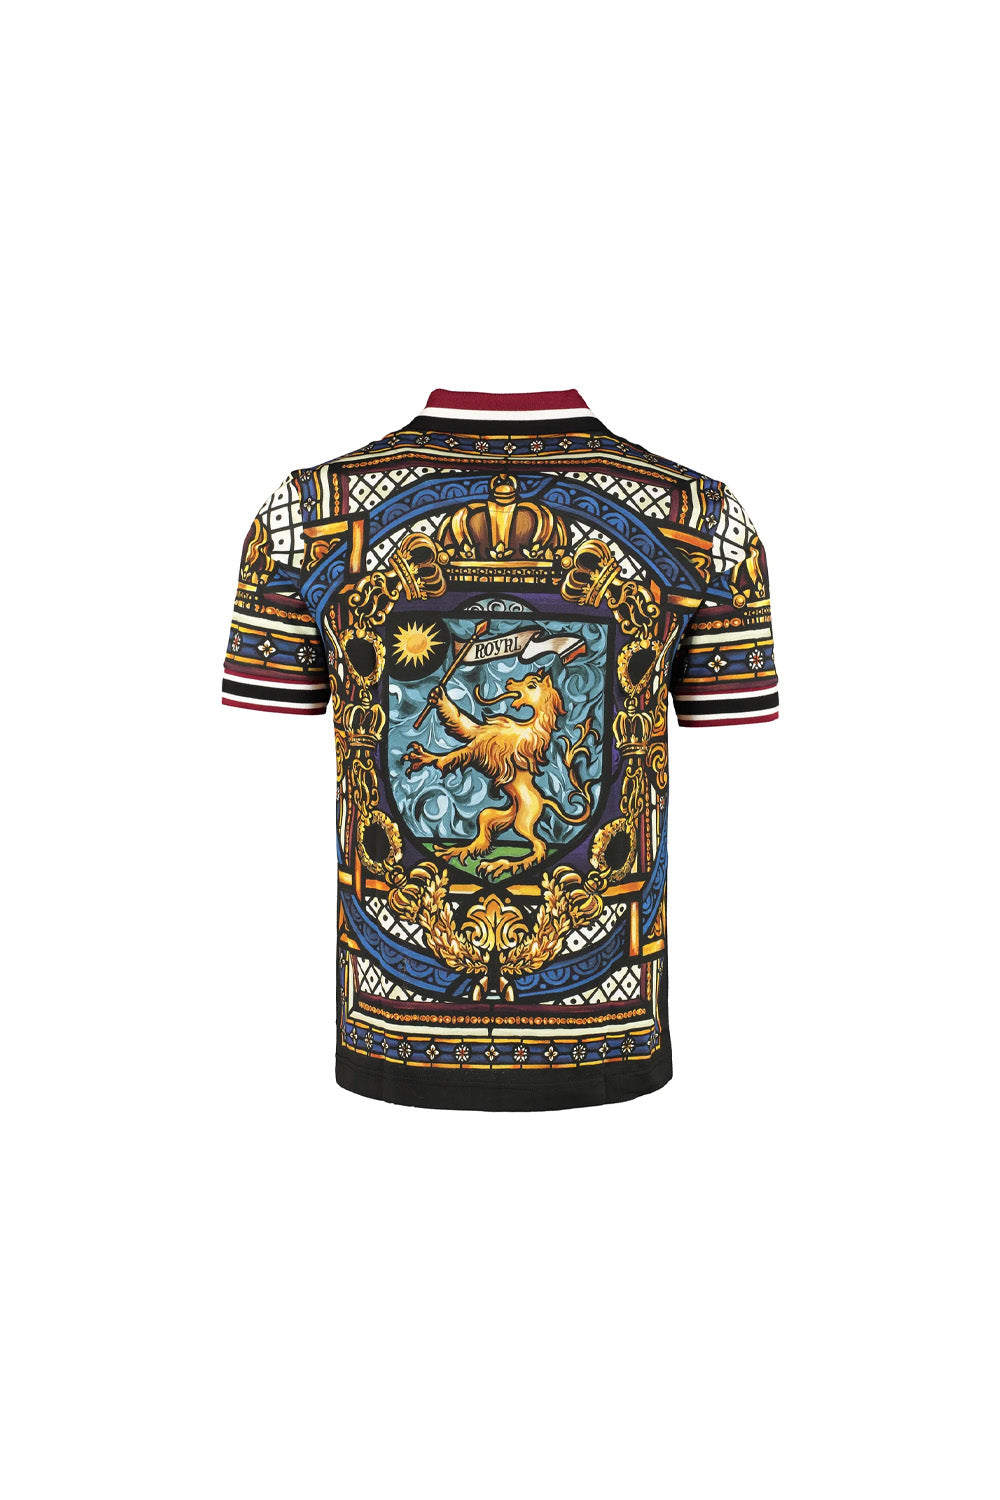 Dolce & Gabbana Lion Print Short Sleeved Polo Shirt